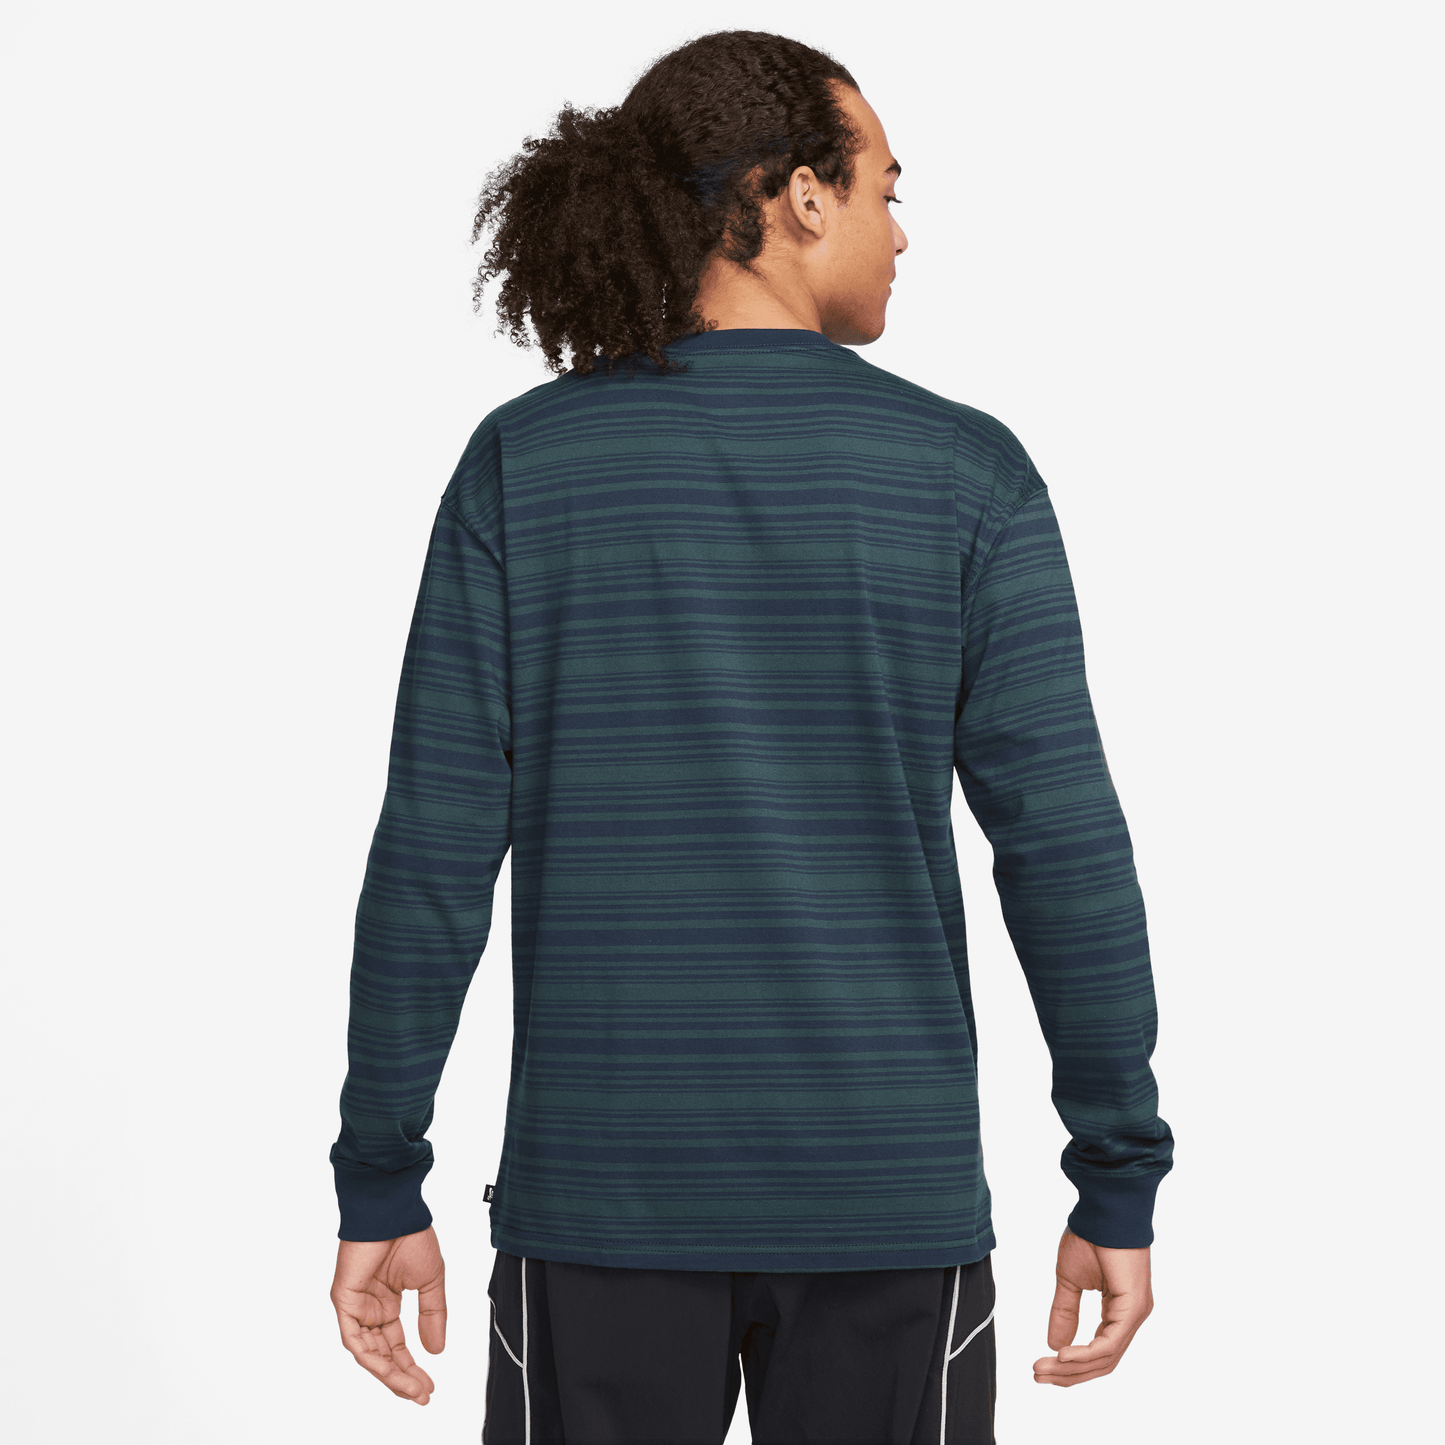 Nike SB Long Sleeve Striped T-Shirt Navy Jungle